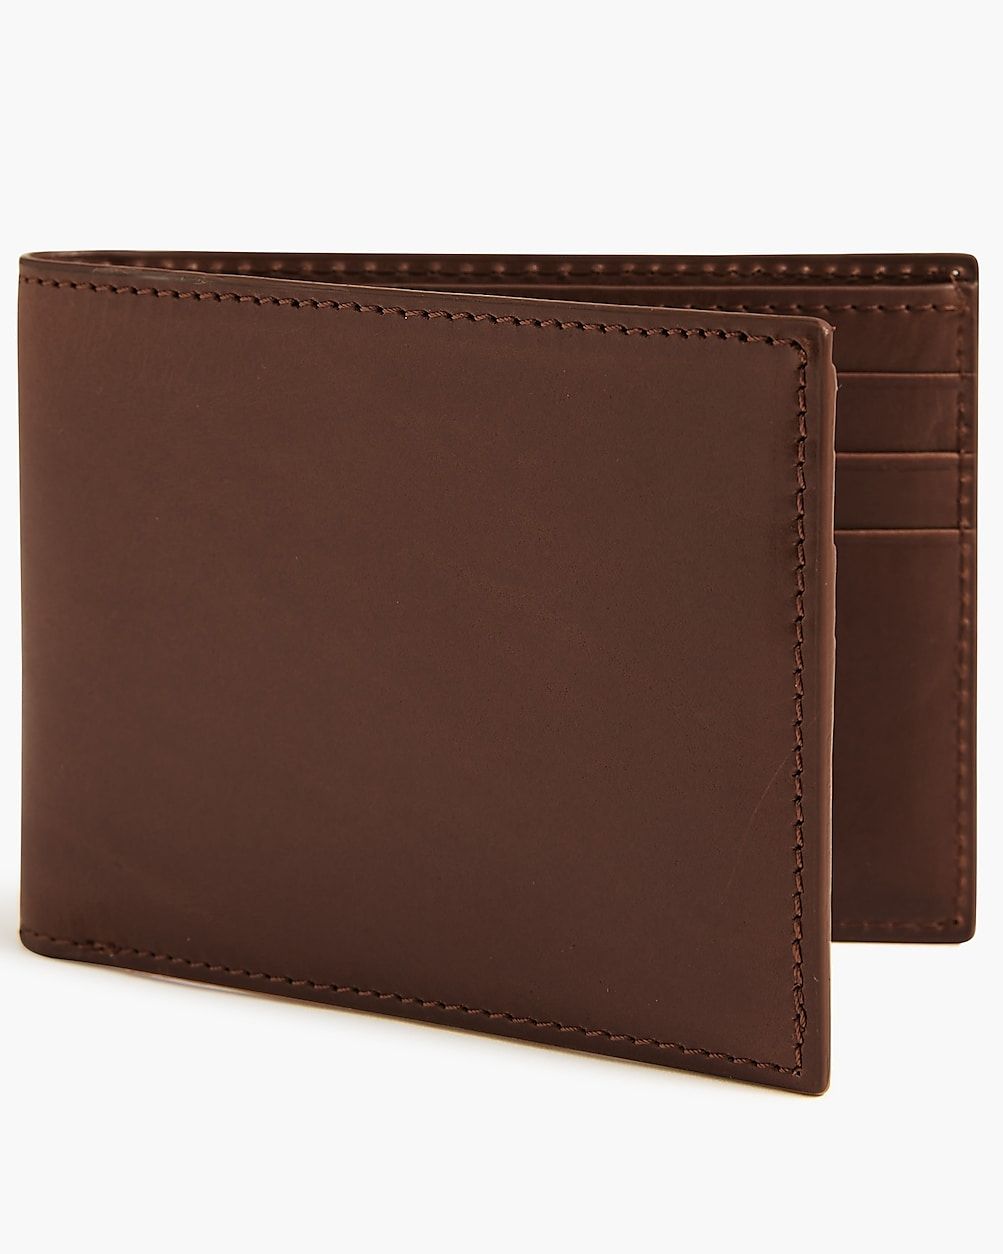 Leather billfold wallet | J.Crew Factory